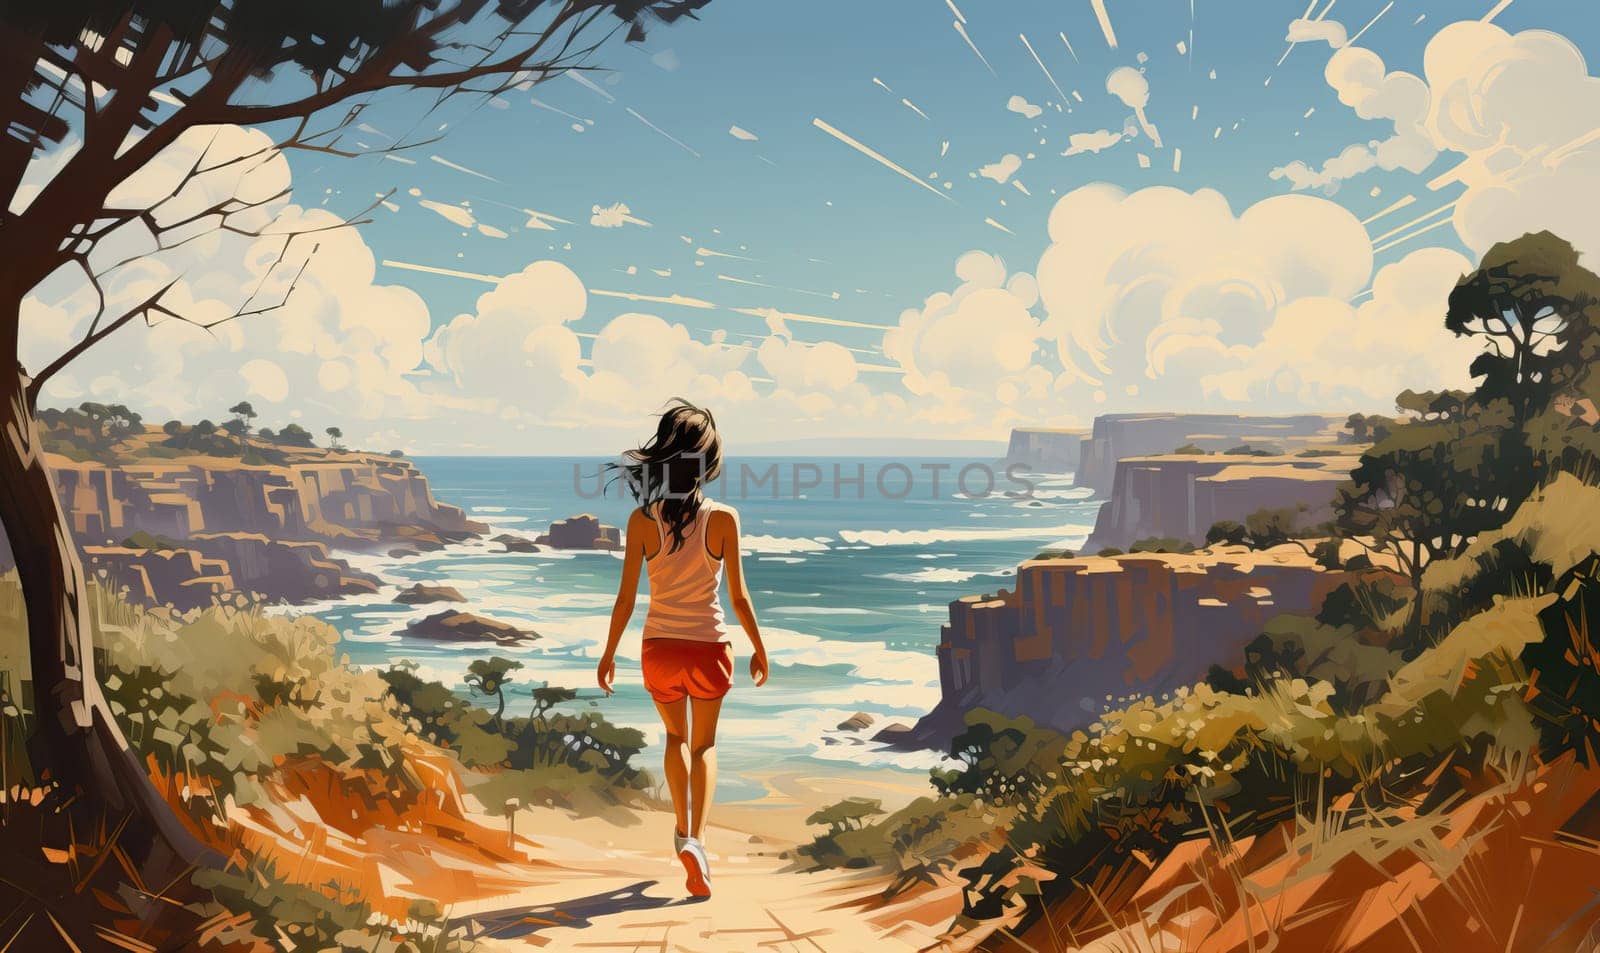 A woman walks along a path near the ocean.